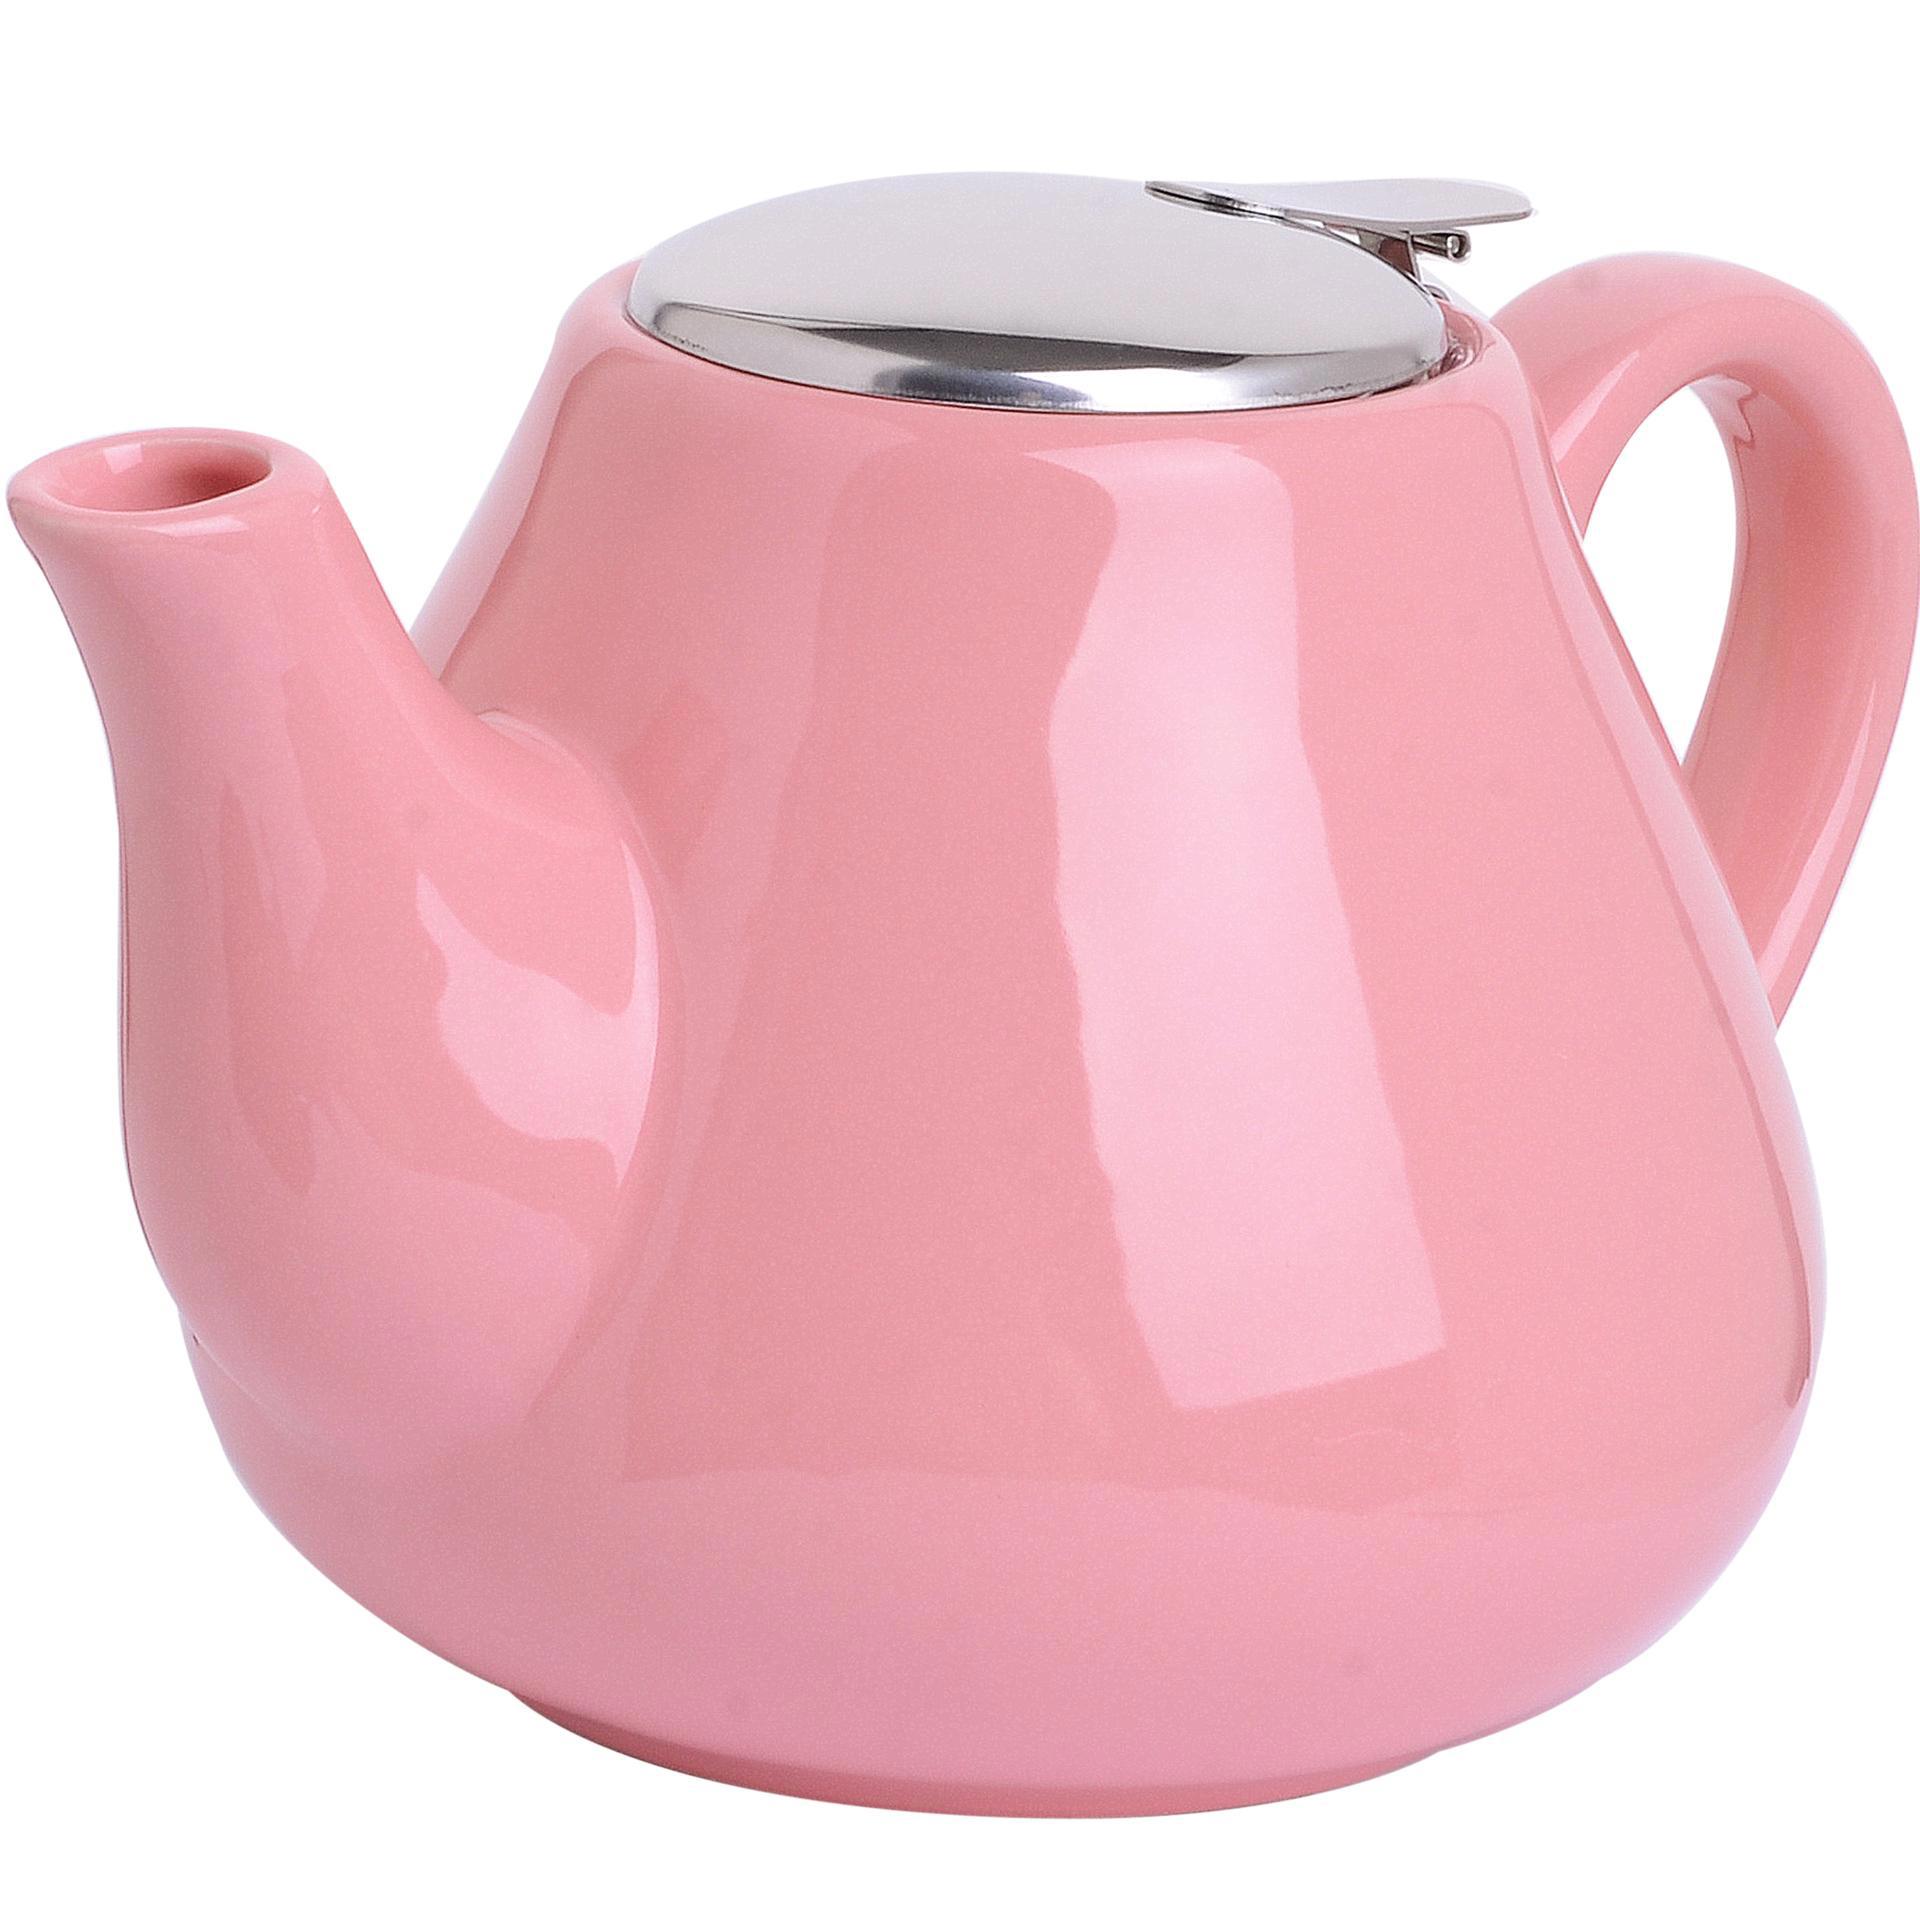 90470679 Заварочный чайник 950 мл керамика цвет розовый STLM-0239748 LORAINE